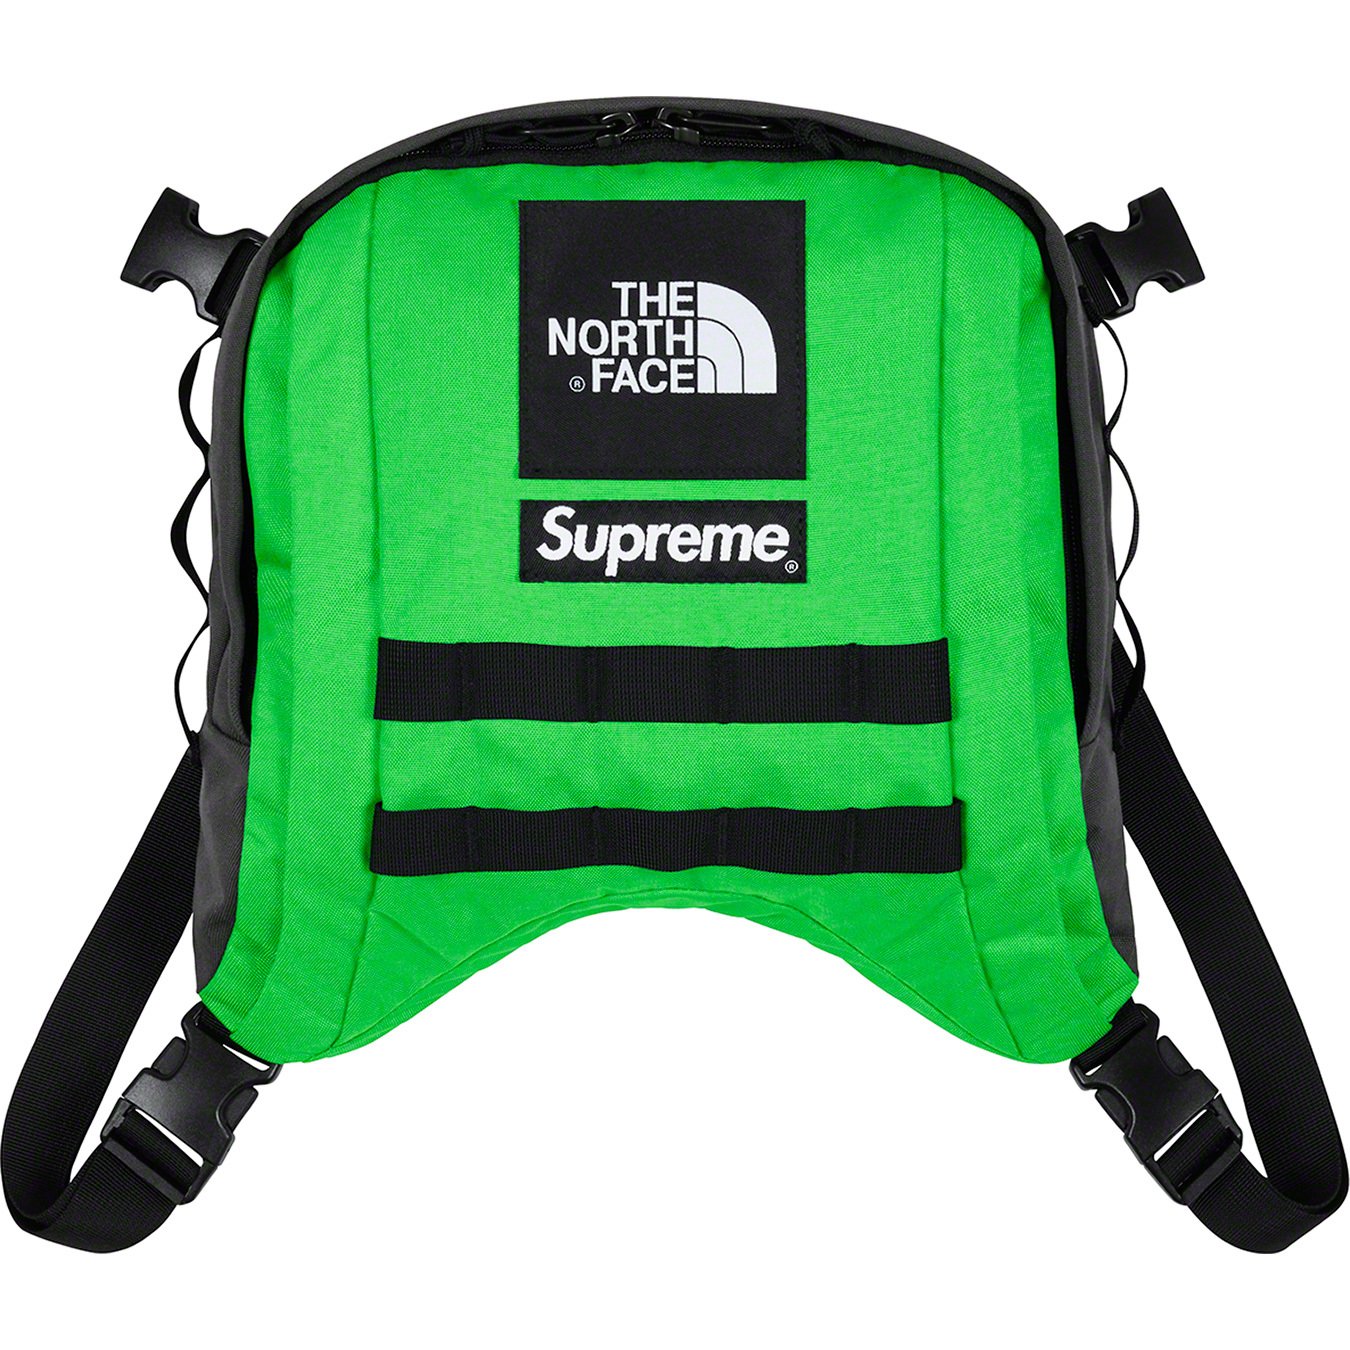 The North Face RTG Backpack - spring summer 2020 - Supreme